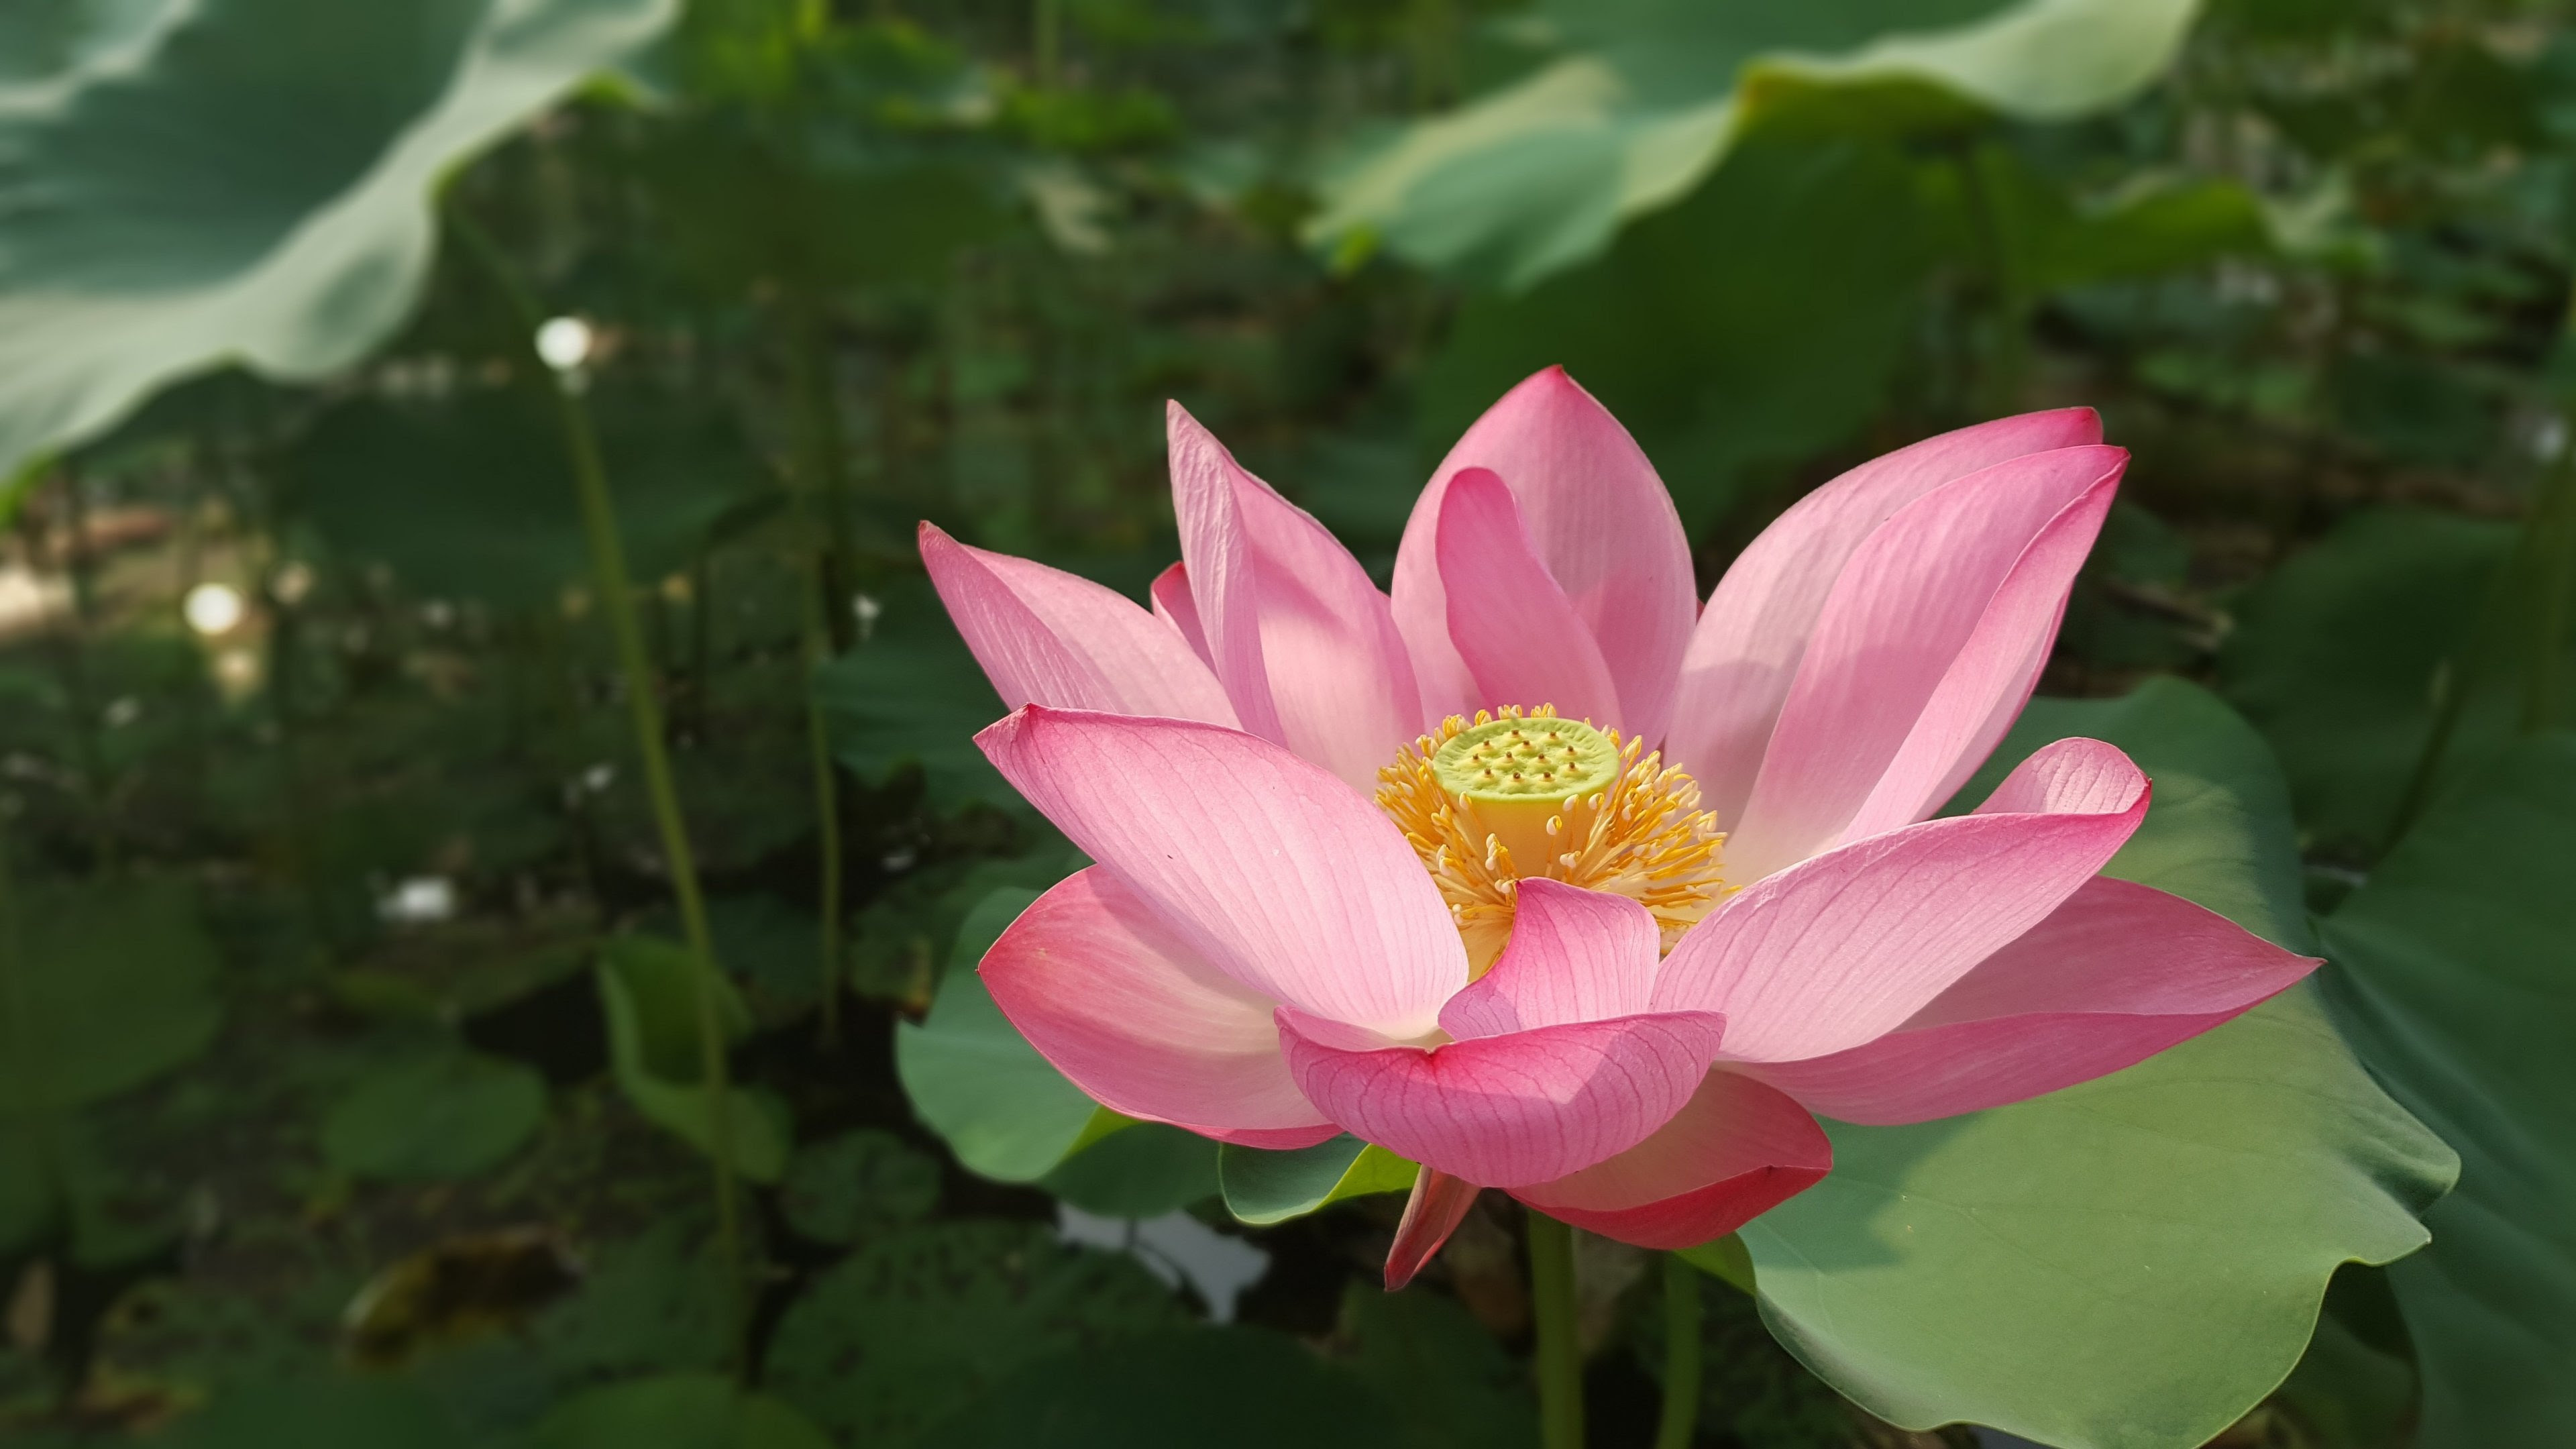 Lotus Flower Phone Wallpaper : lotus flower - Download iPhone,iPod